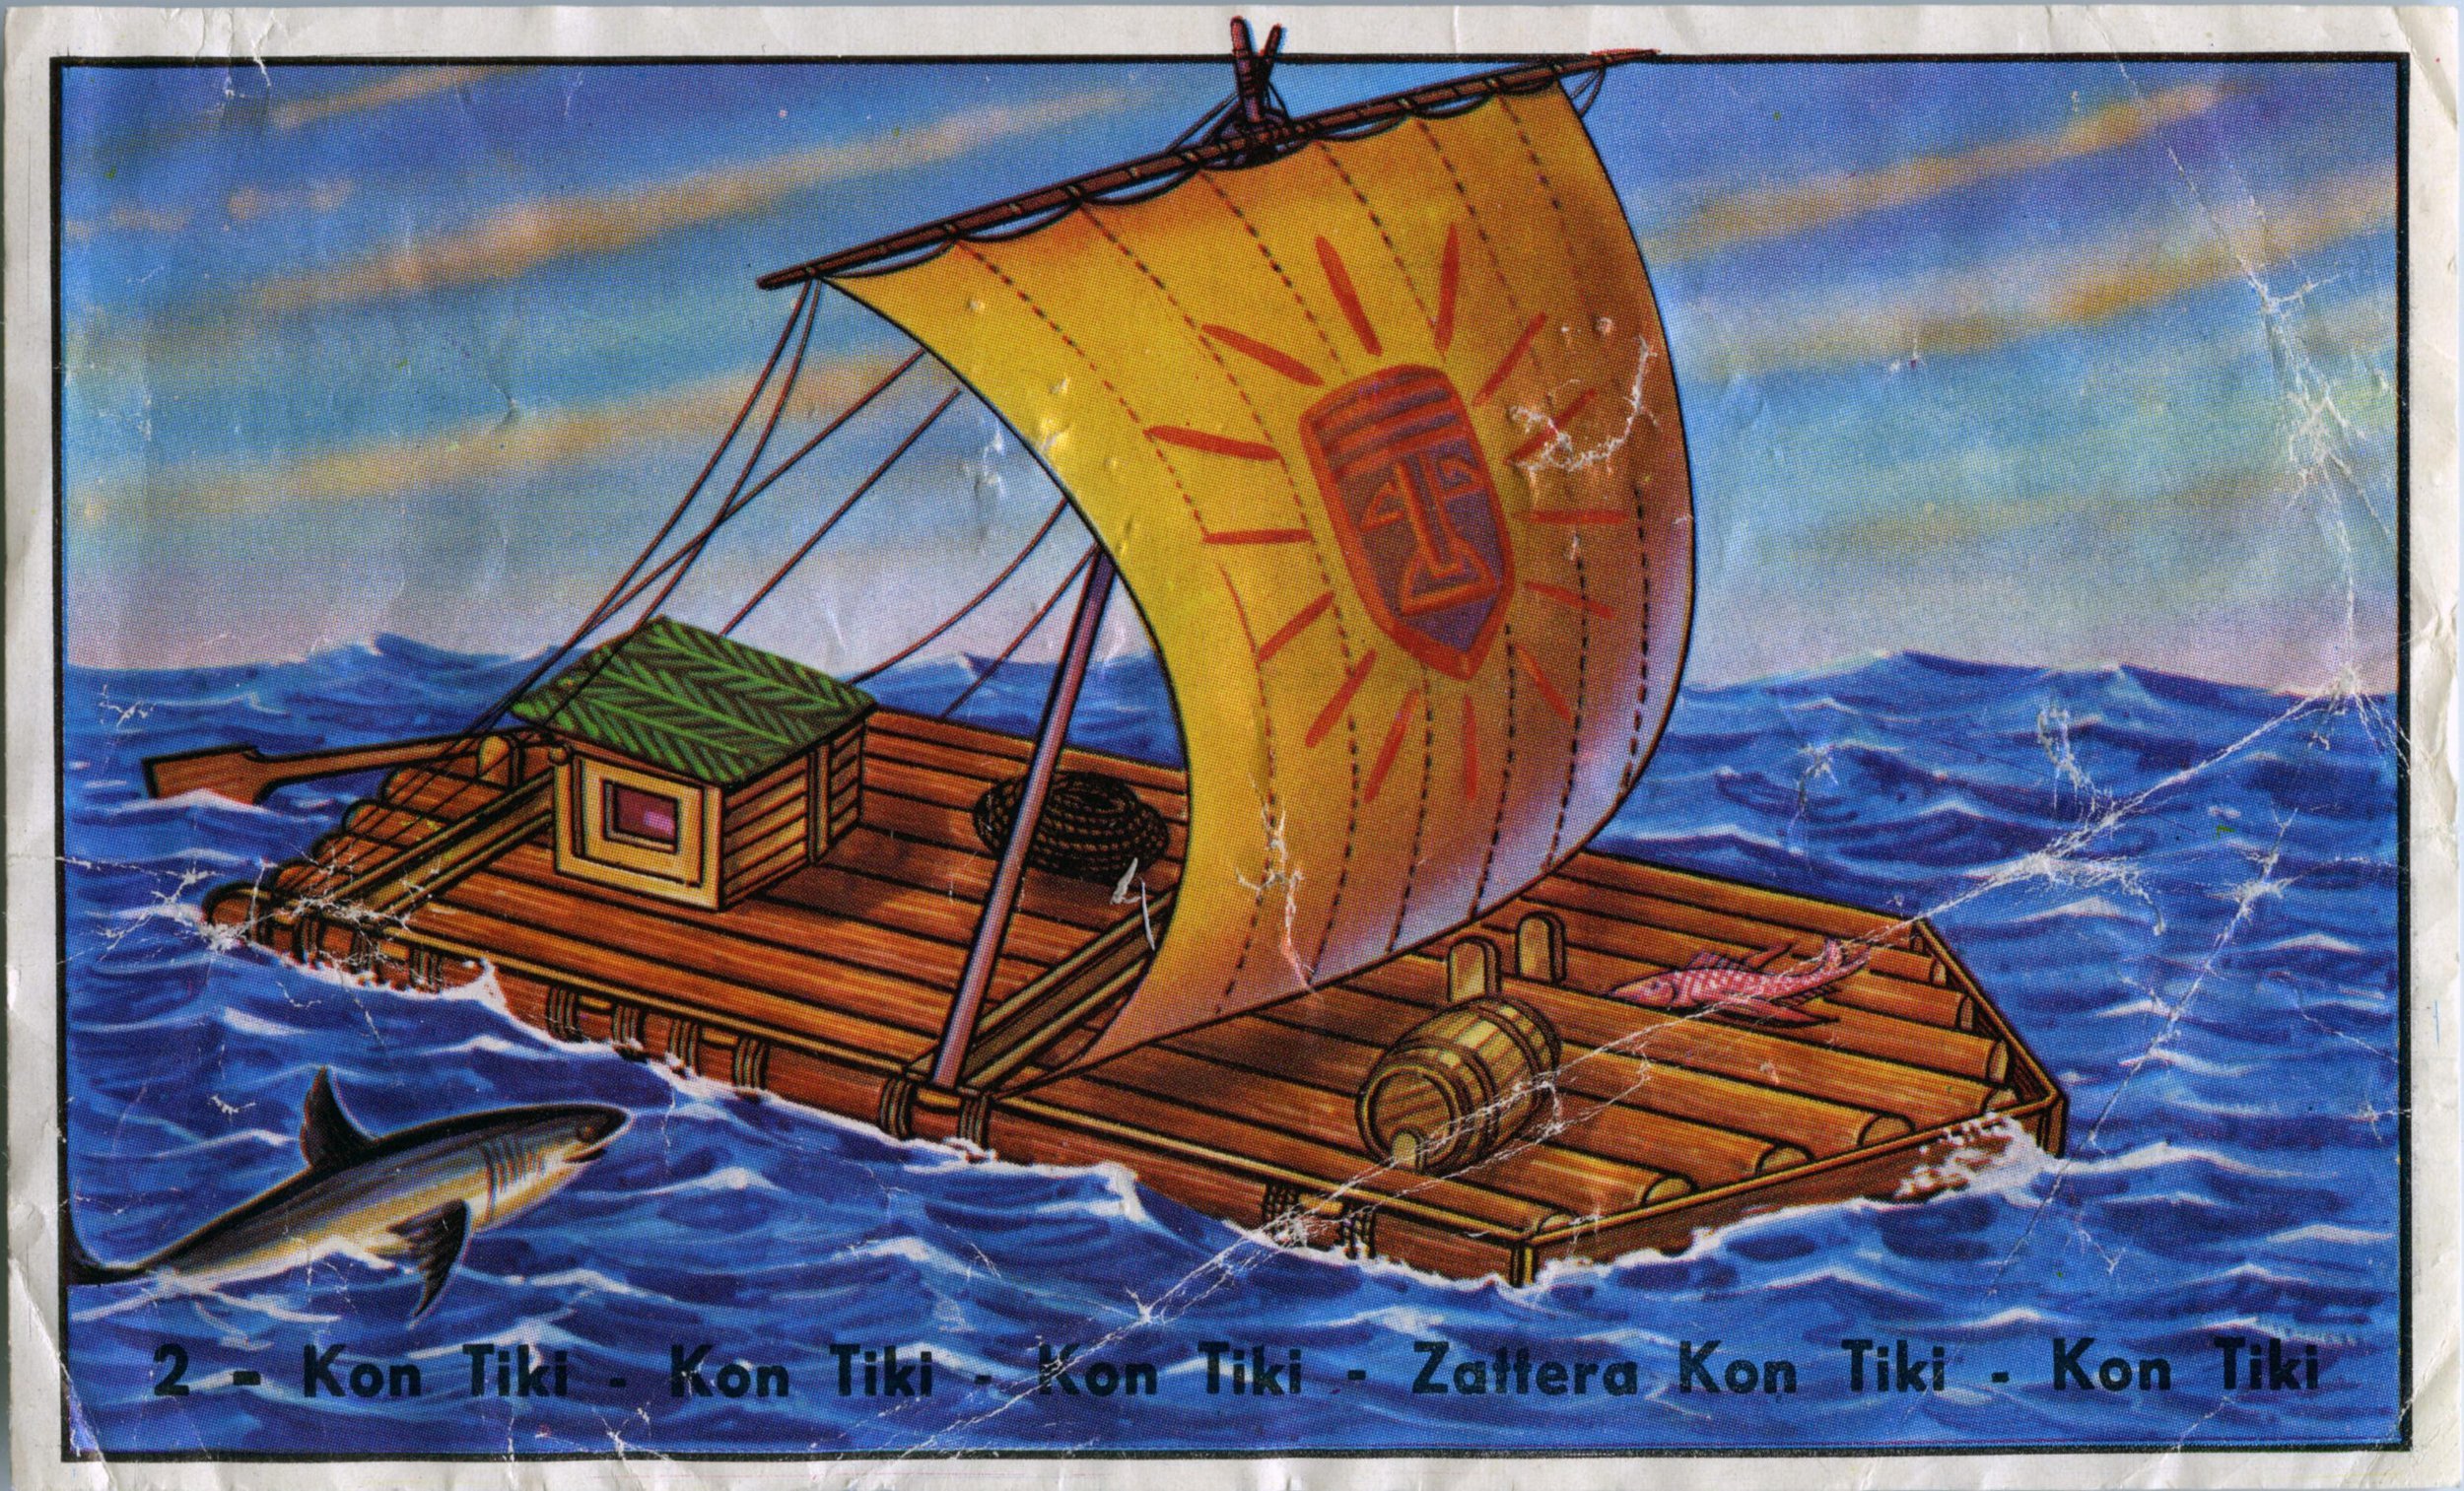 Illustration of the Kon-Tiki raft in the set